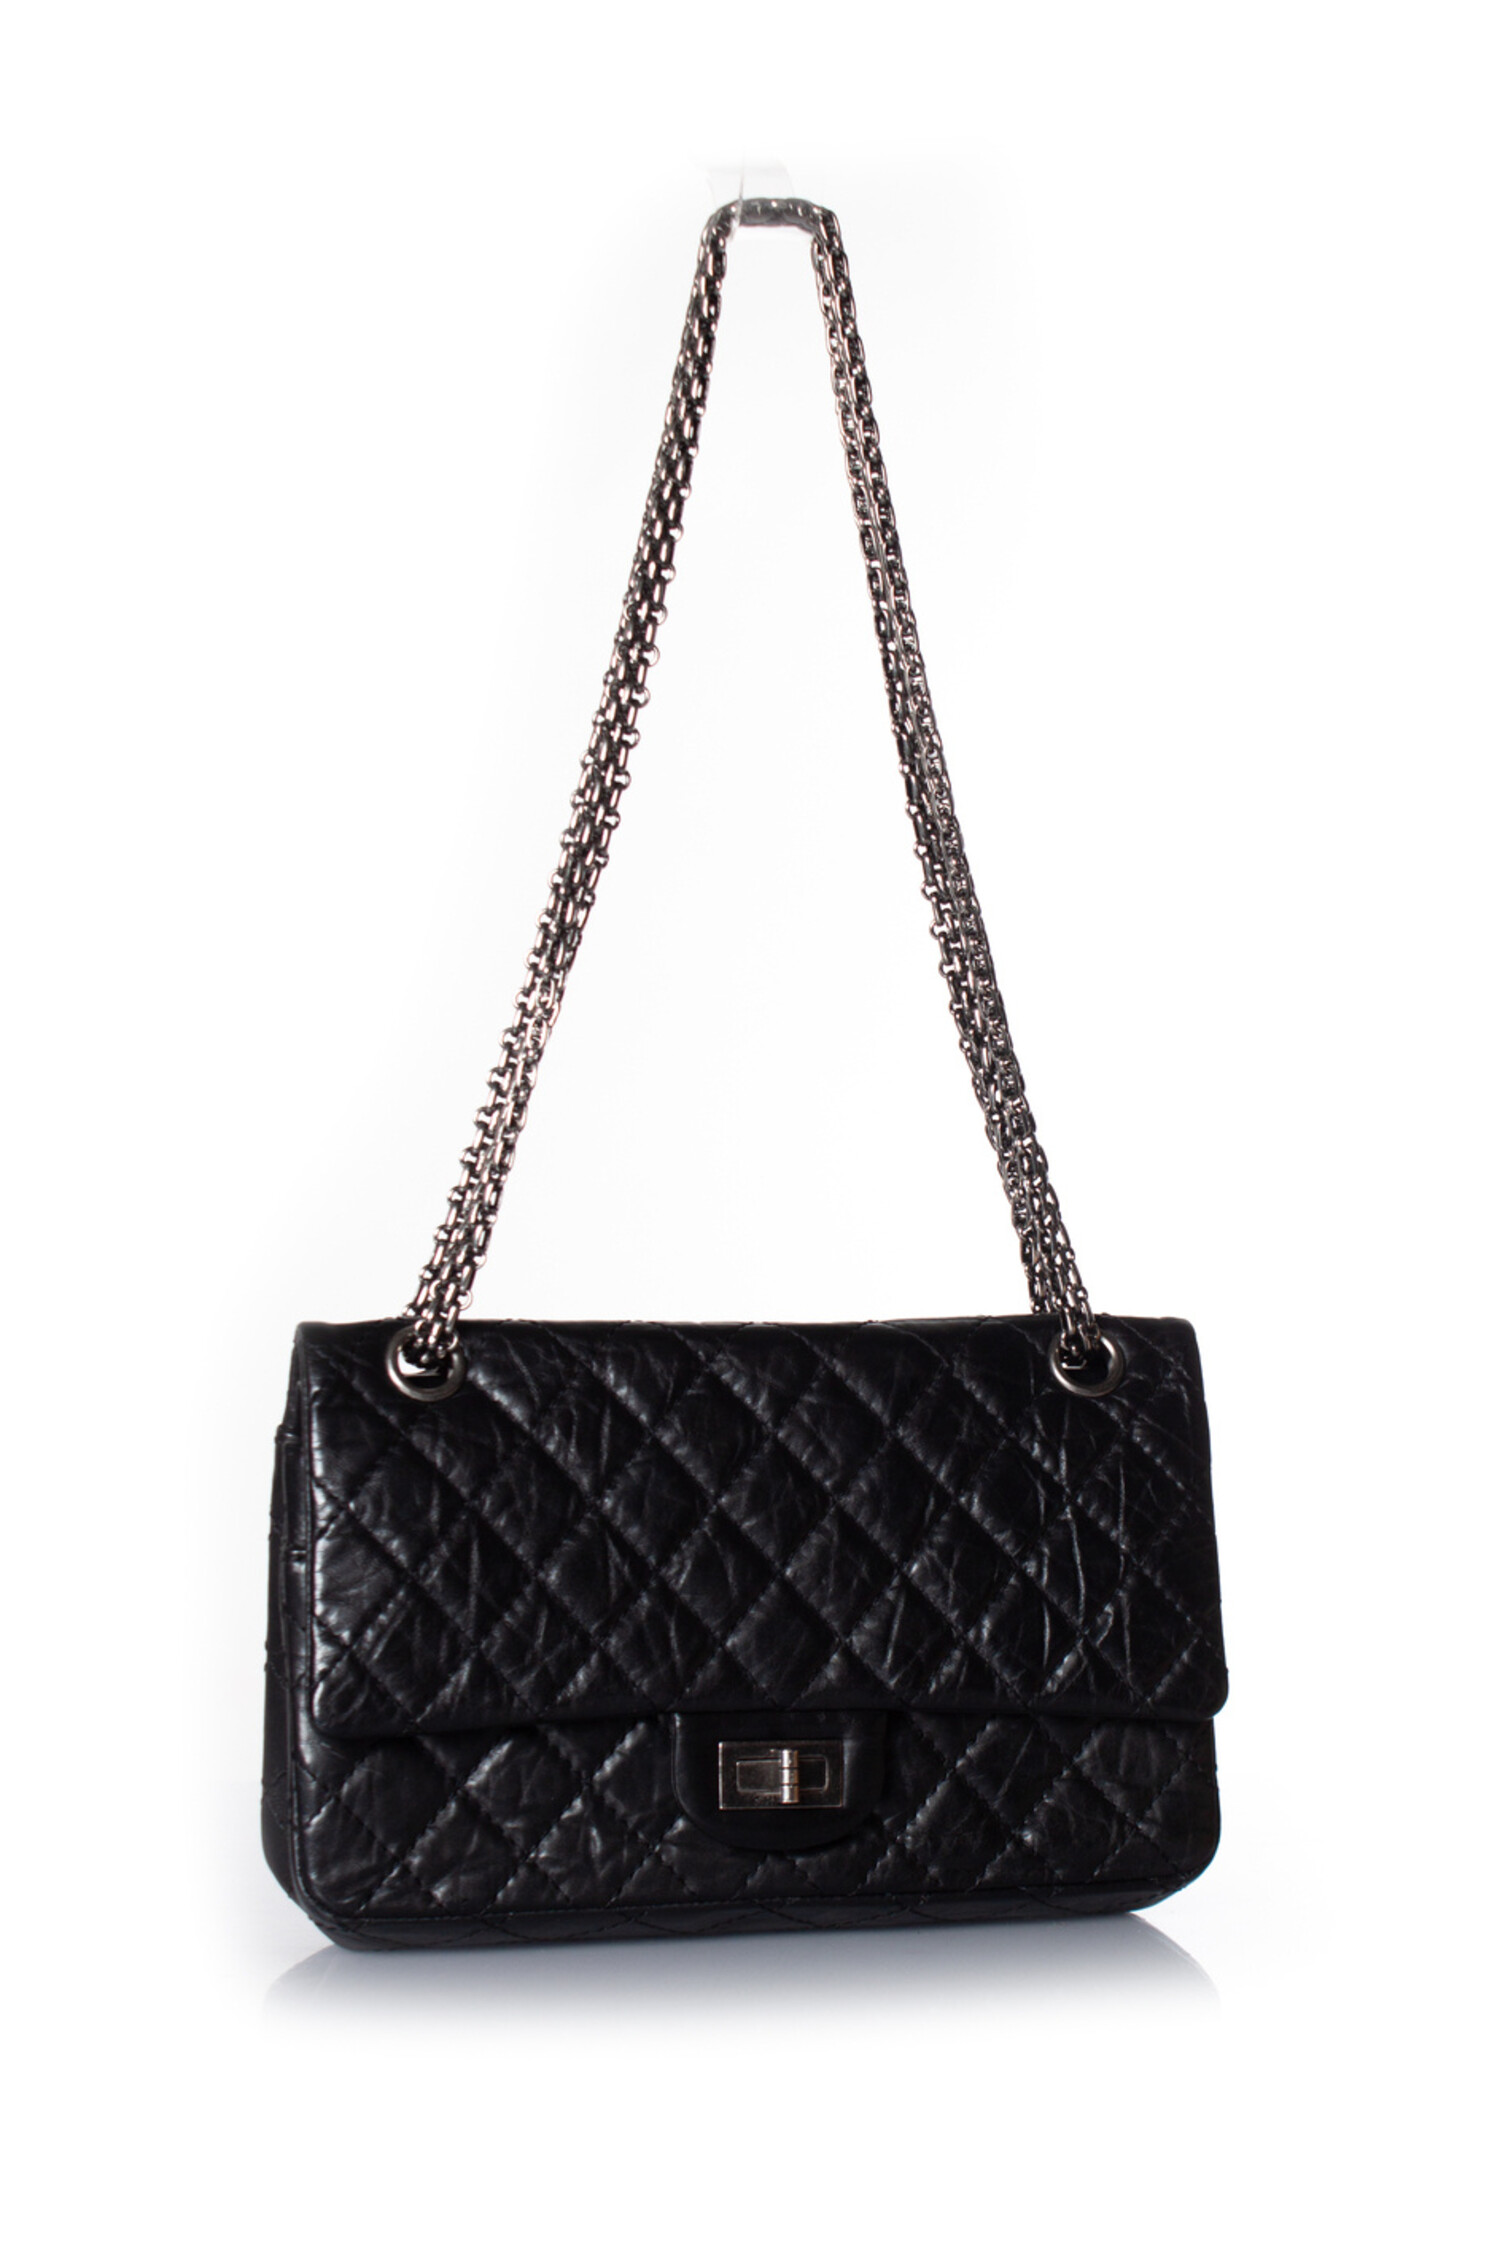 Chanel 2.55 Mini Review - A Glam Lifestyle | Fashion & Lifestyle Blog